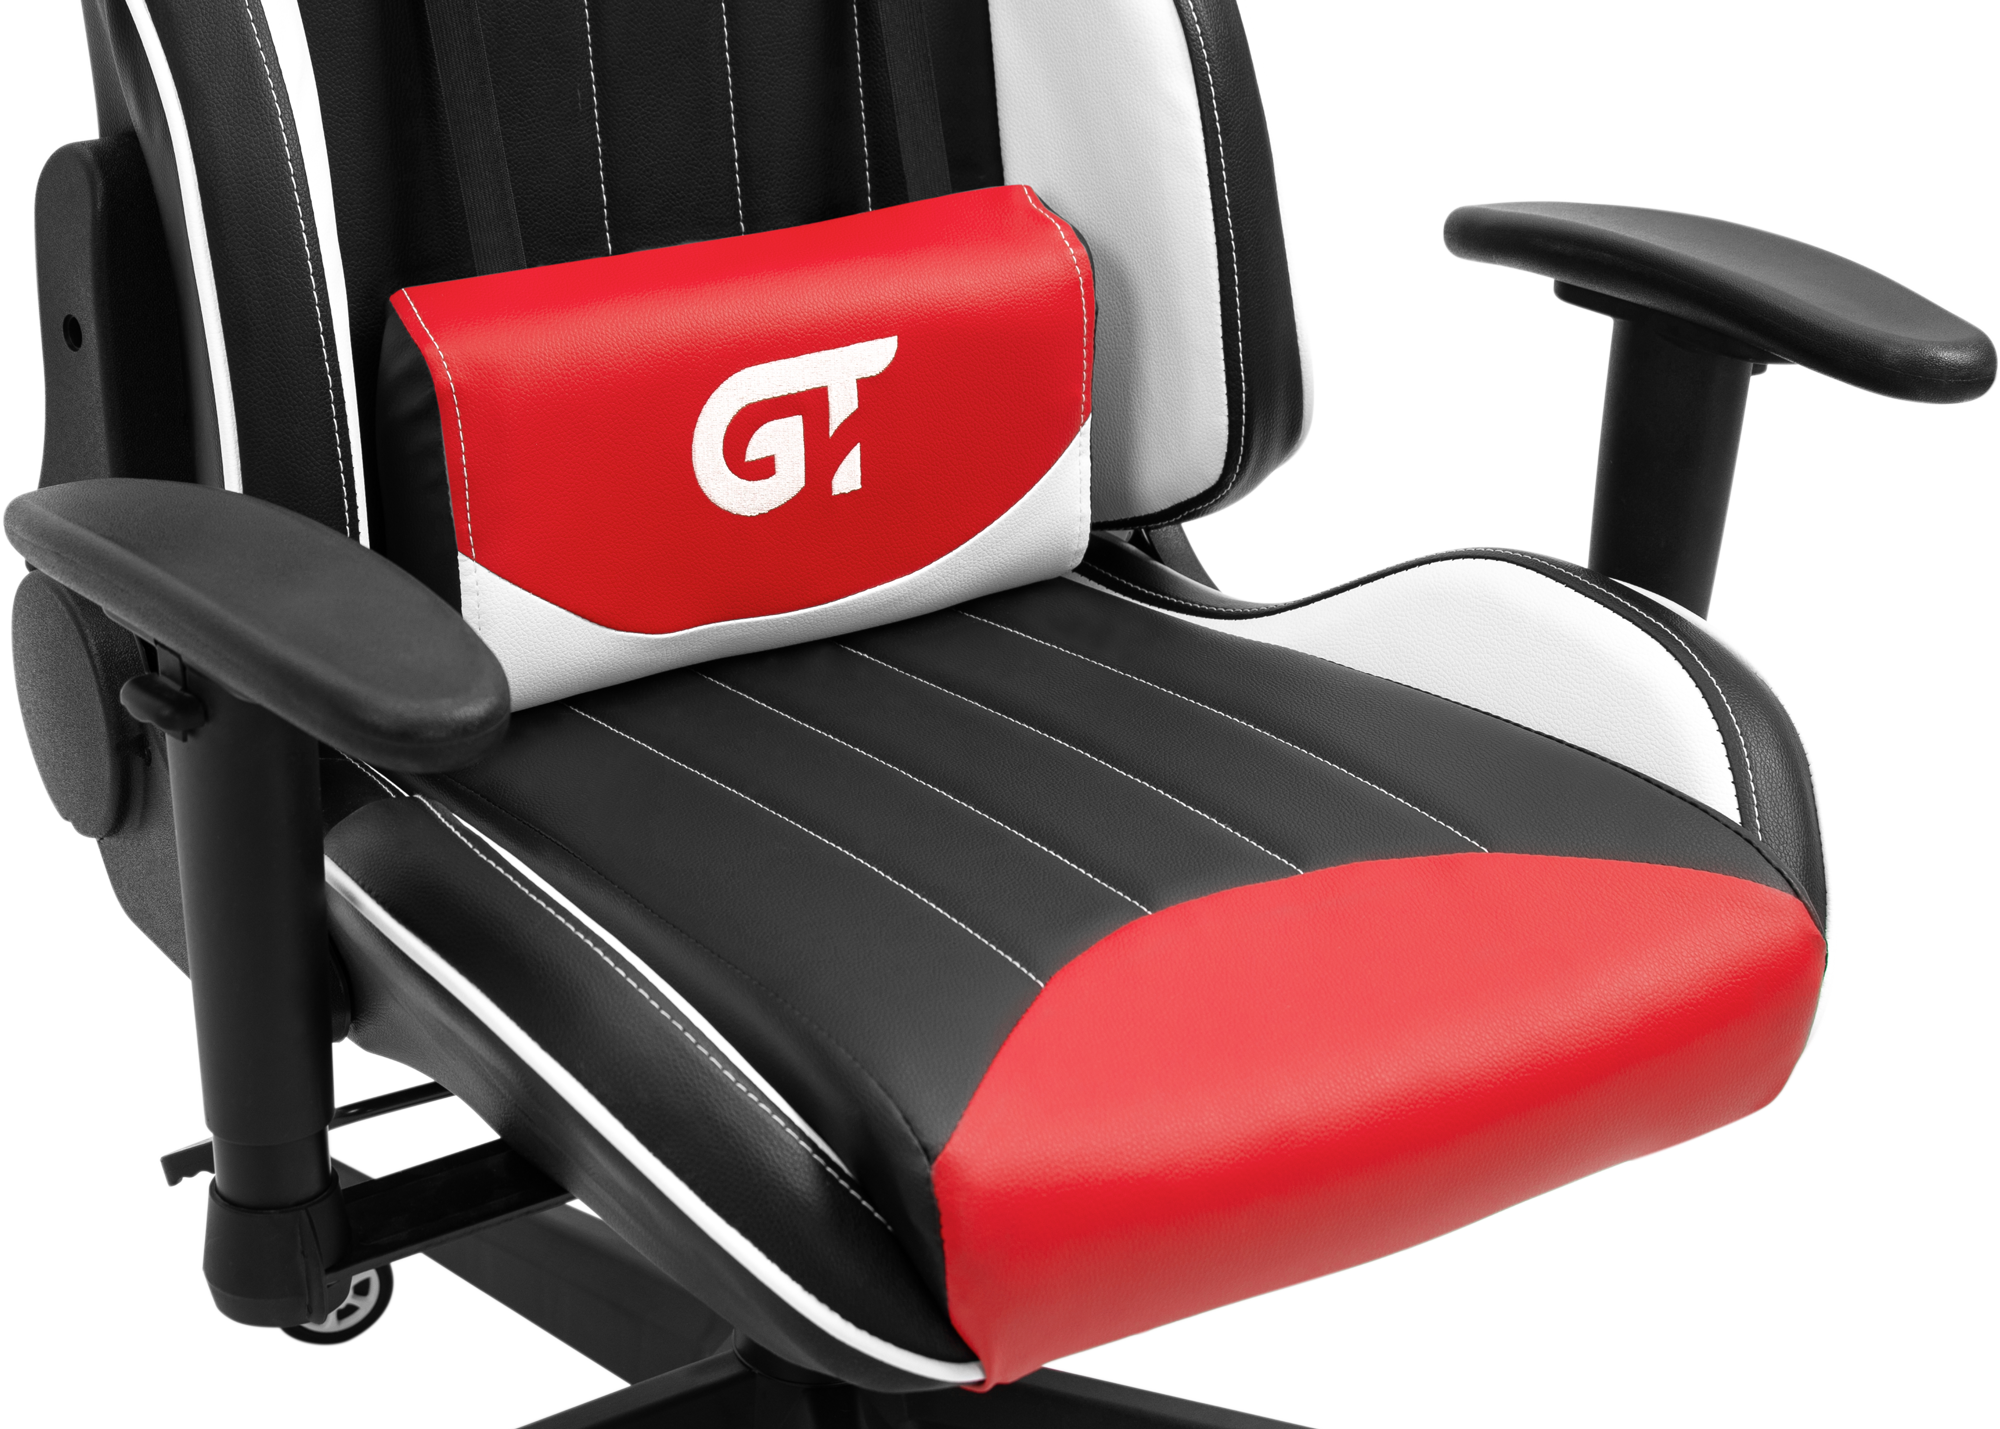 Геймерське крісло GT Racer чорне червоно-біле (X-5813 Black/Red/White) - фото 10